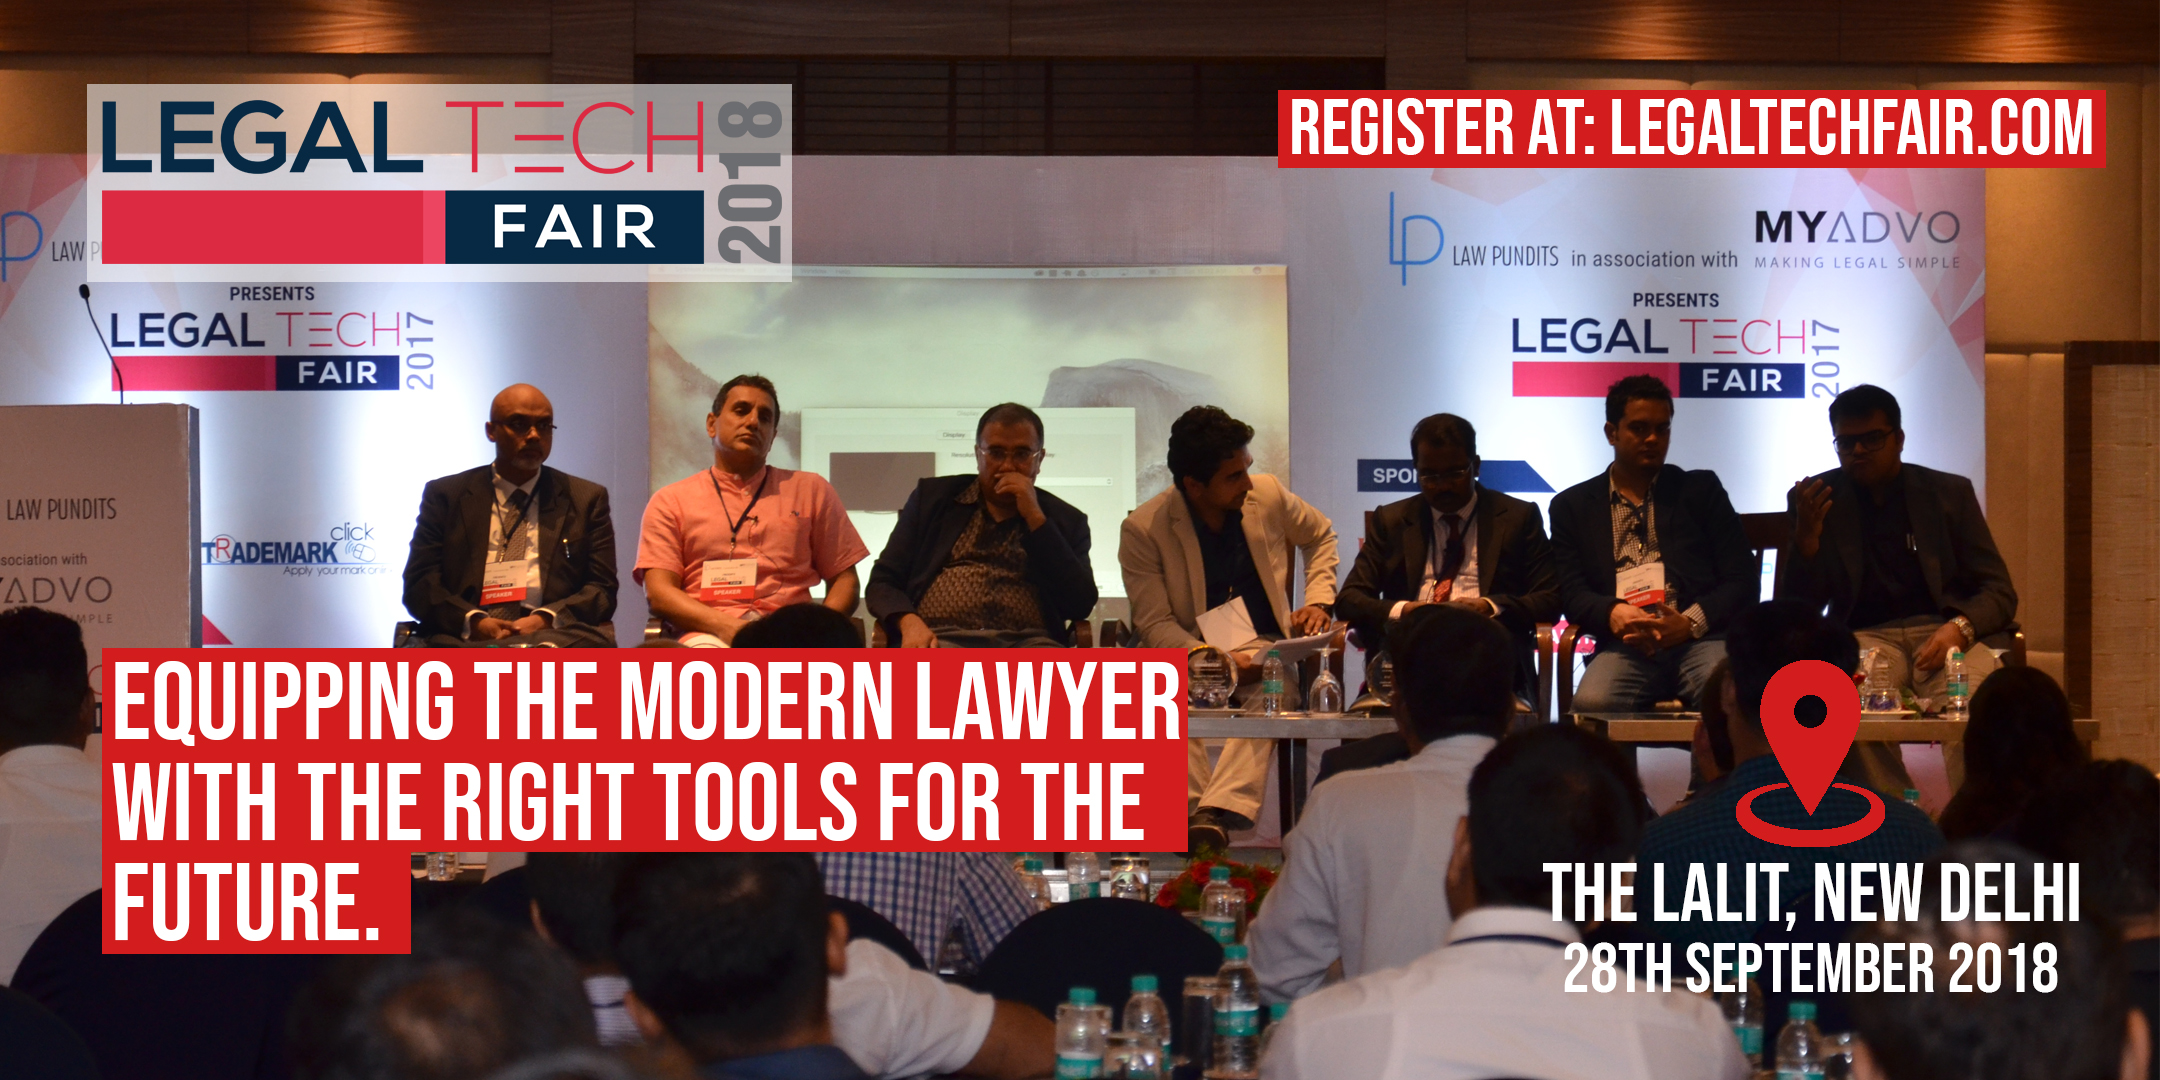 Legal Tech Fair 2018 by Law Pundits, New Delhi, Delhi, India